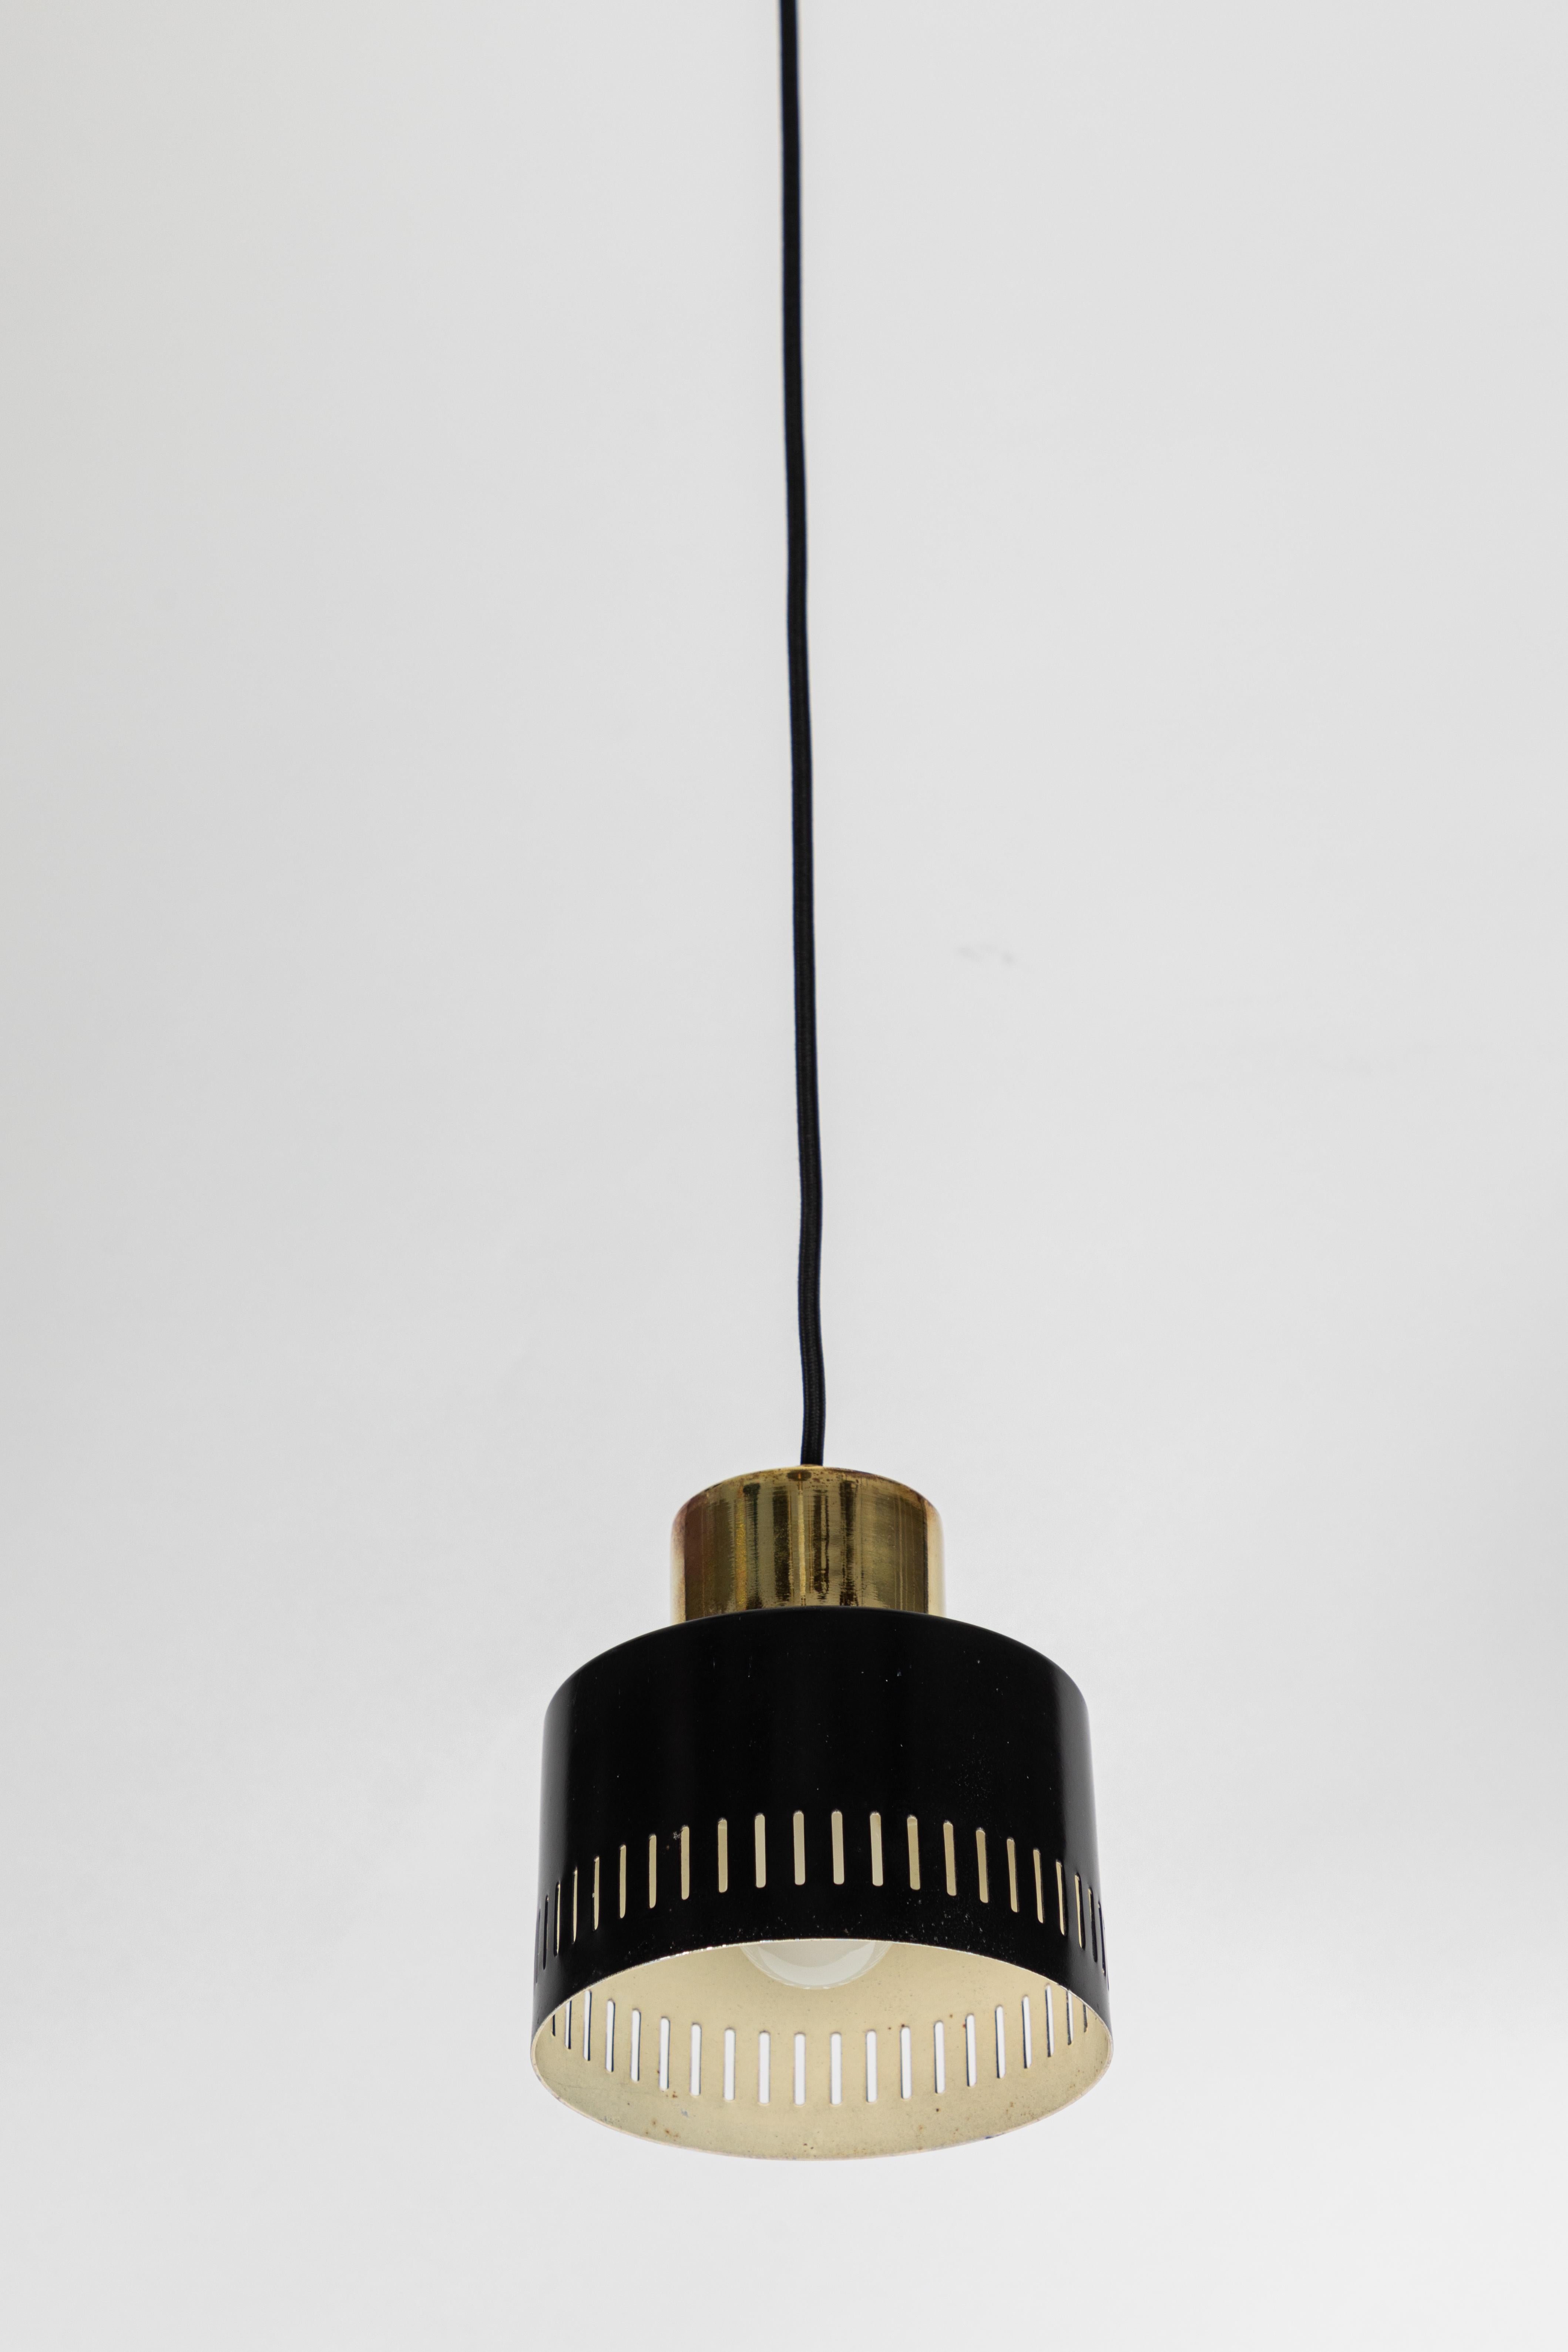 1950s Italian Pendant in Black and Brass Attributed to Stilnovo 2